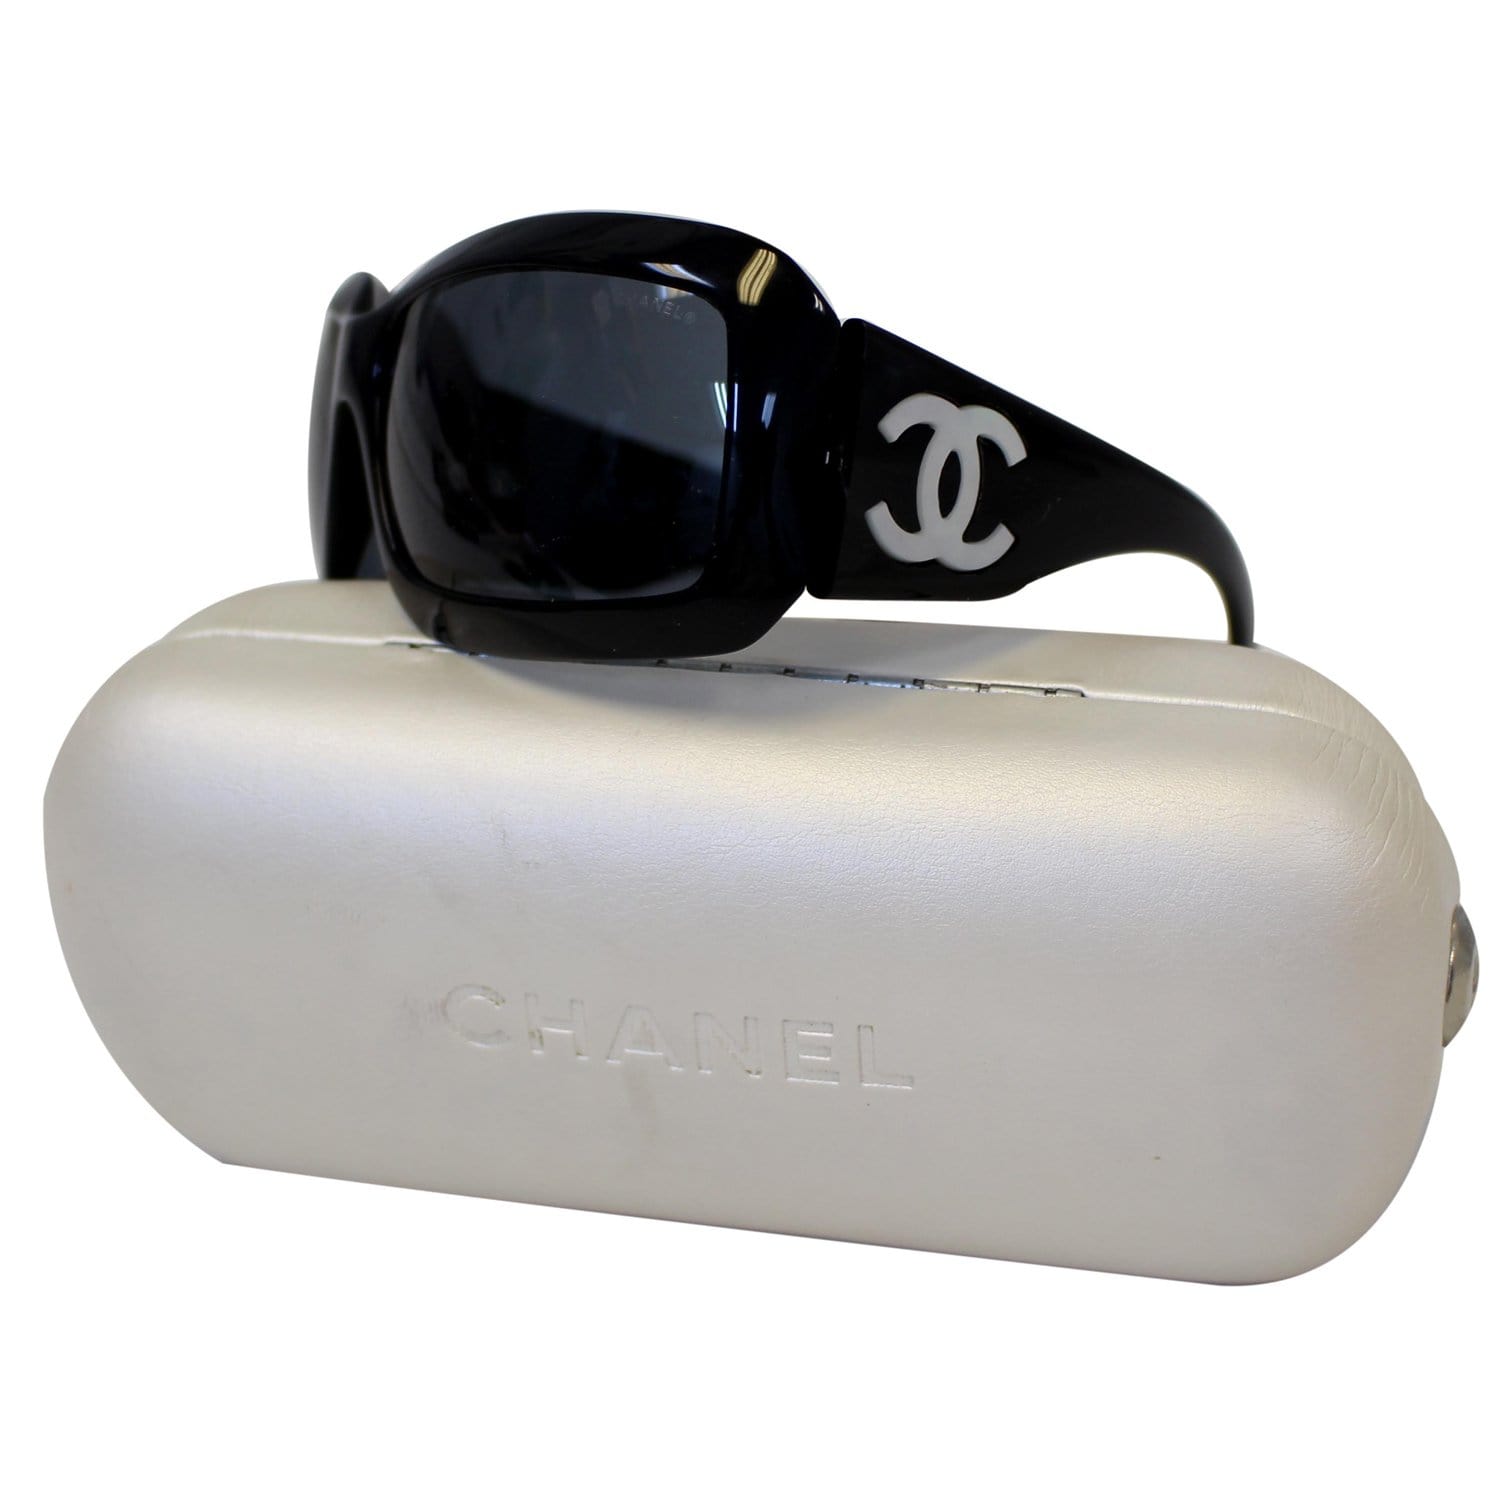 Chanel Sunglasses Black CC White Logo Monogram Chunky 5076 